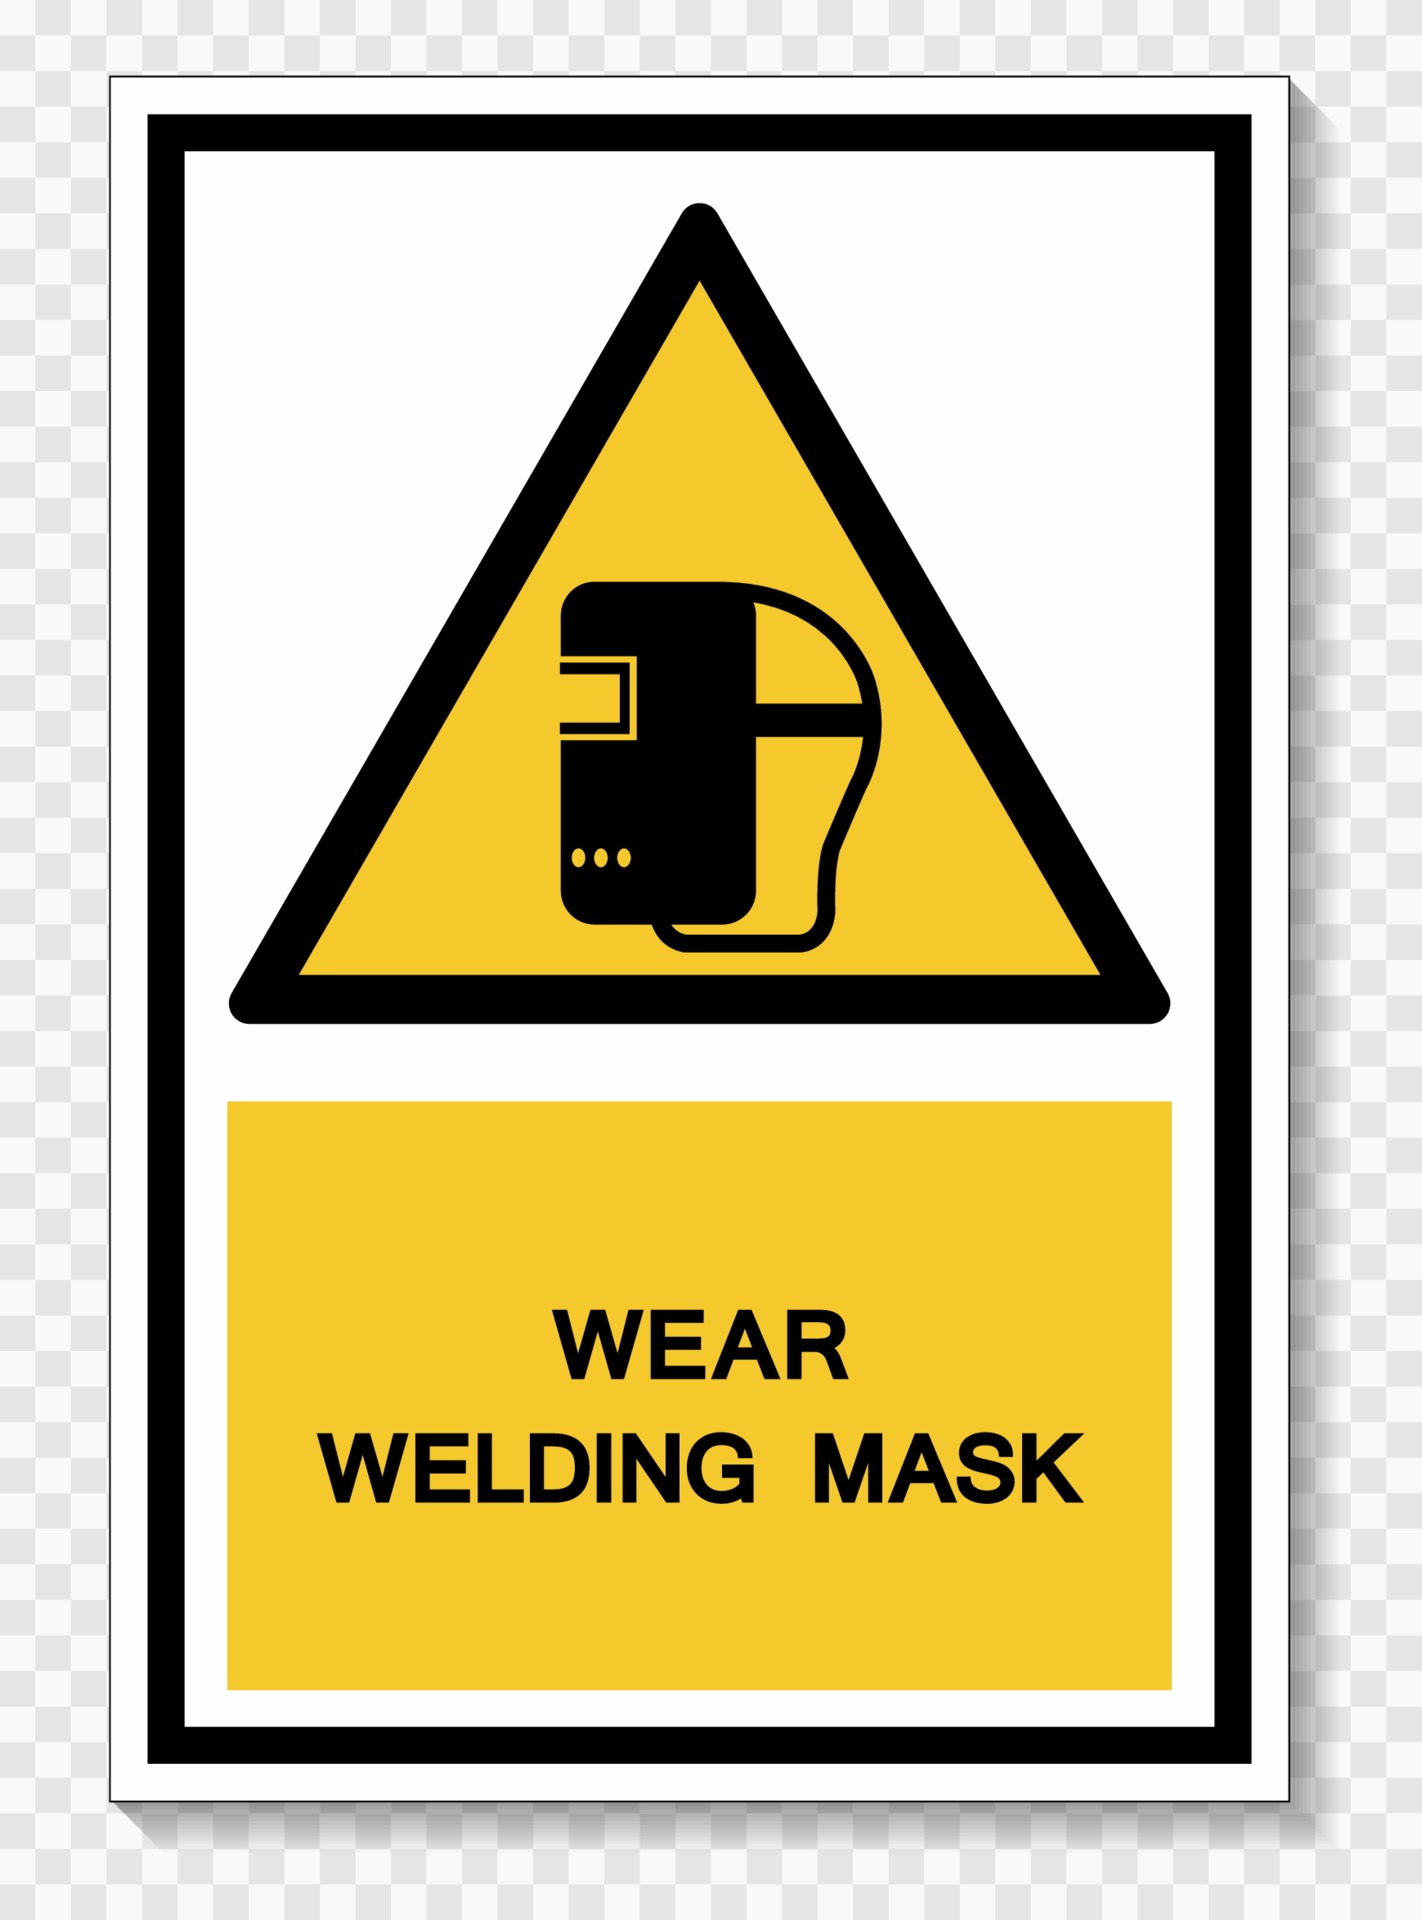 Wear welding mask Safety sign 